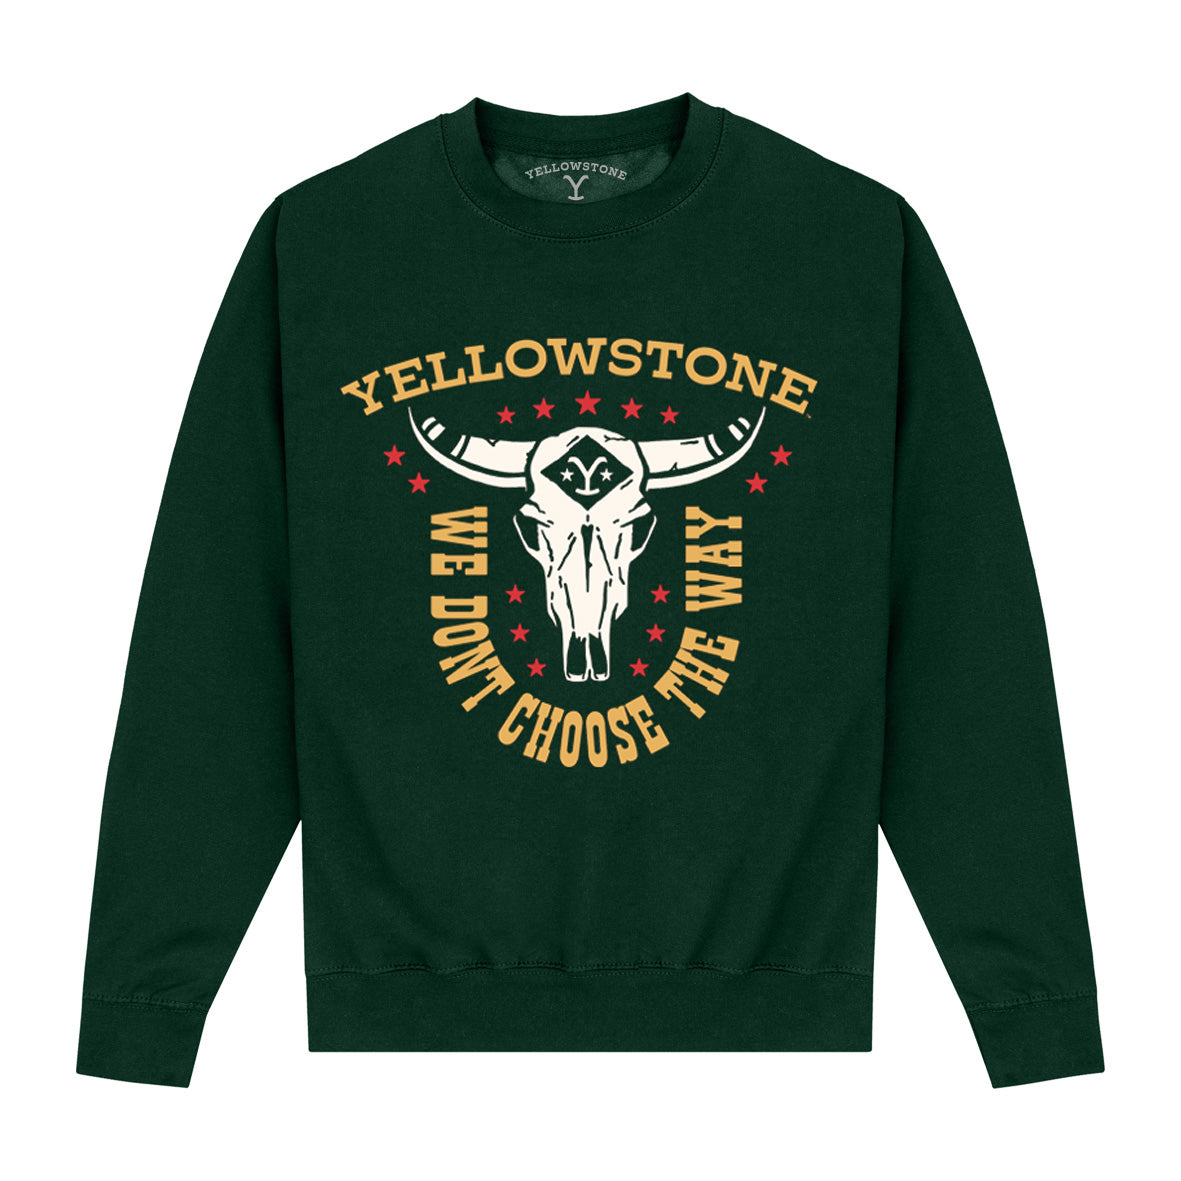 Yellowstone We Don't Choose Sweatshirt